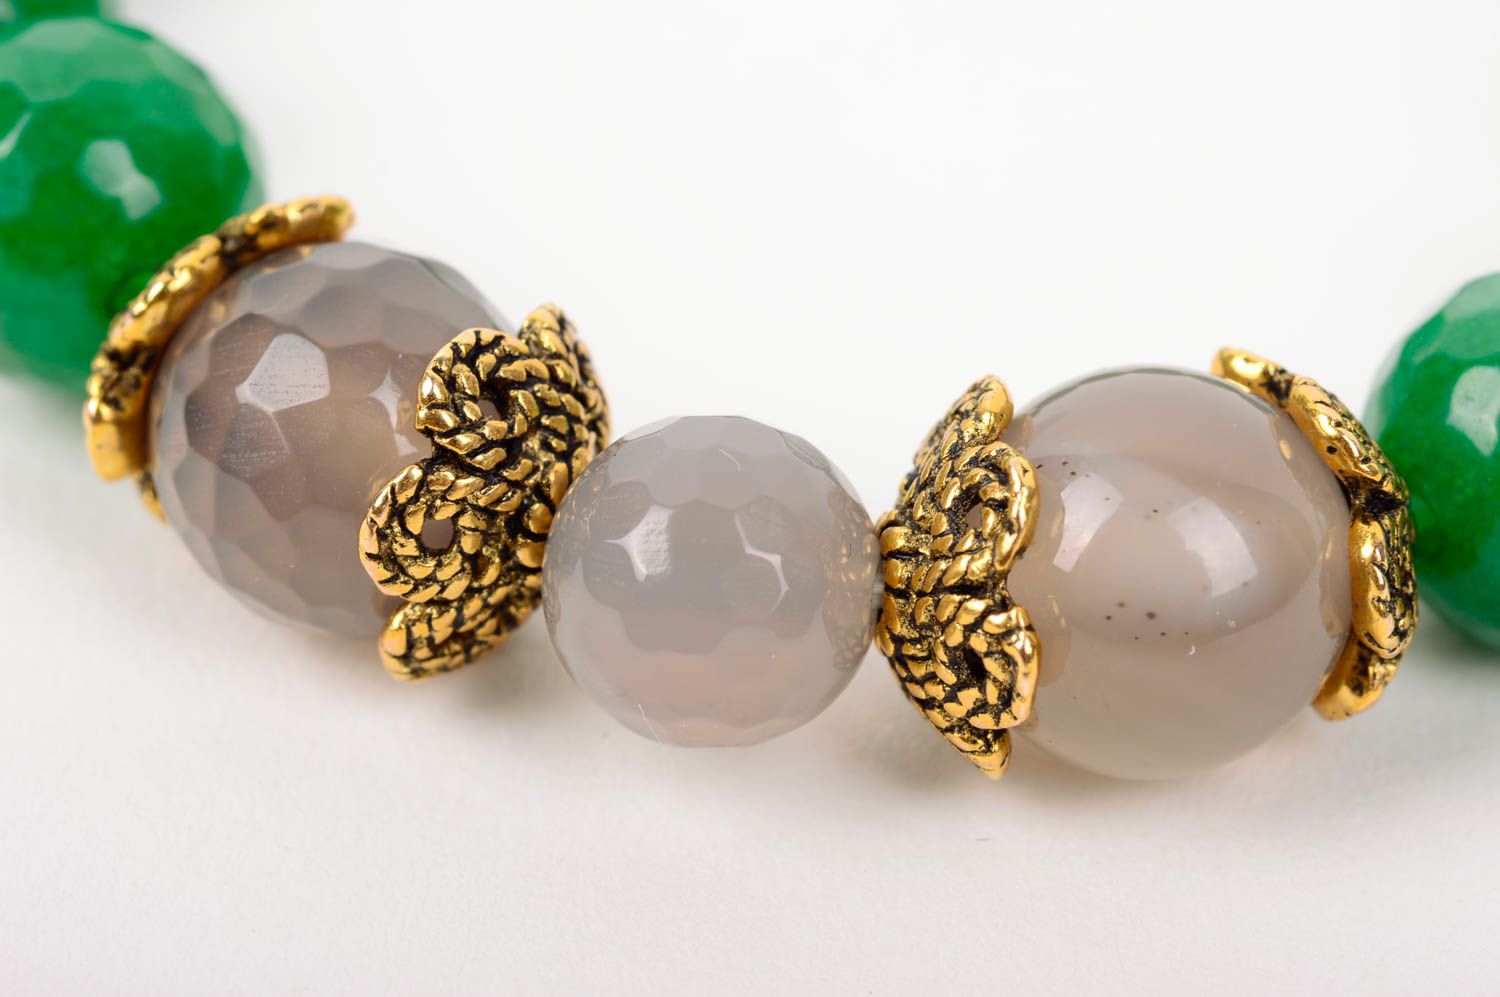 Bead bracelet handmade jewelry gemstone jewelry designer accessories gift ideas photo 4